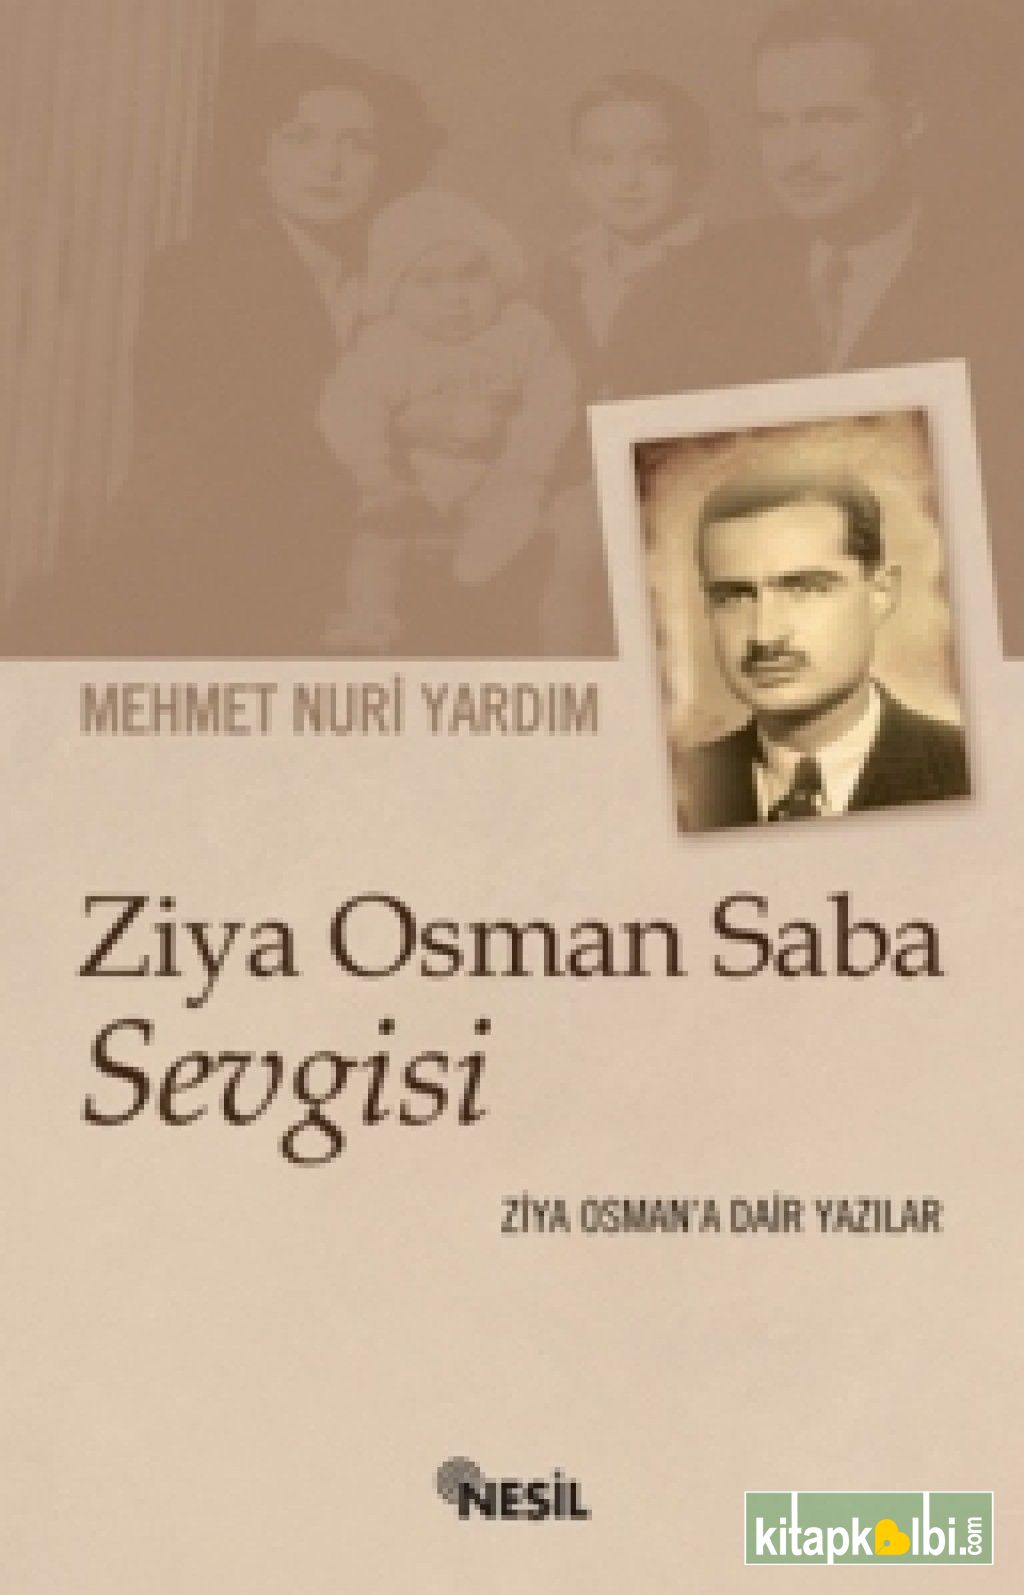 Ziya Osman Saba Sevgisi